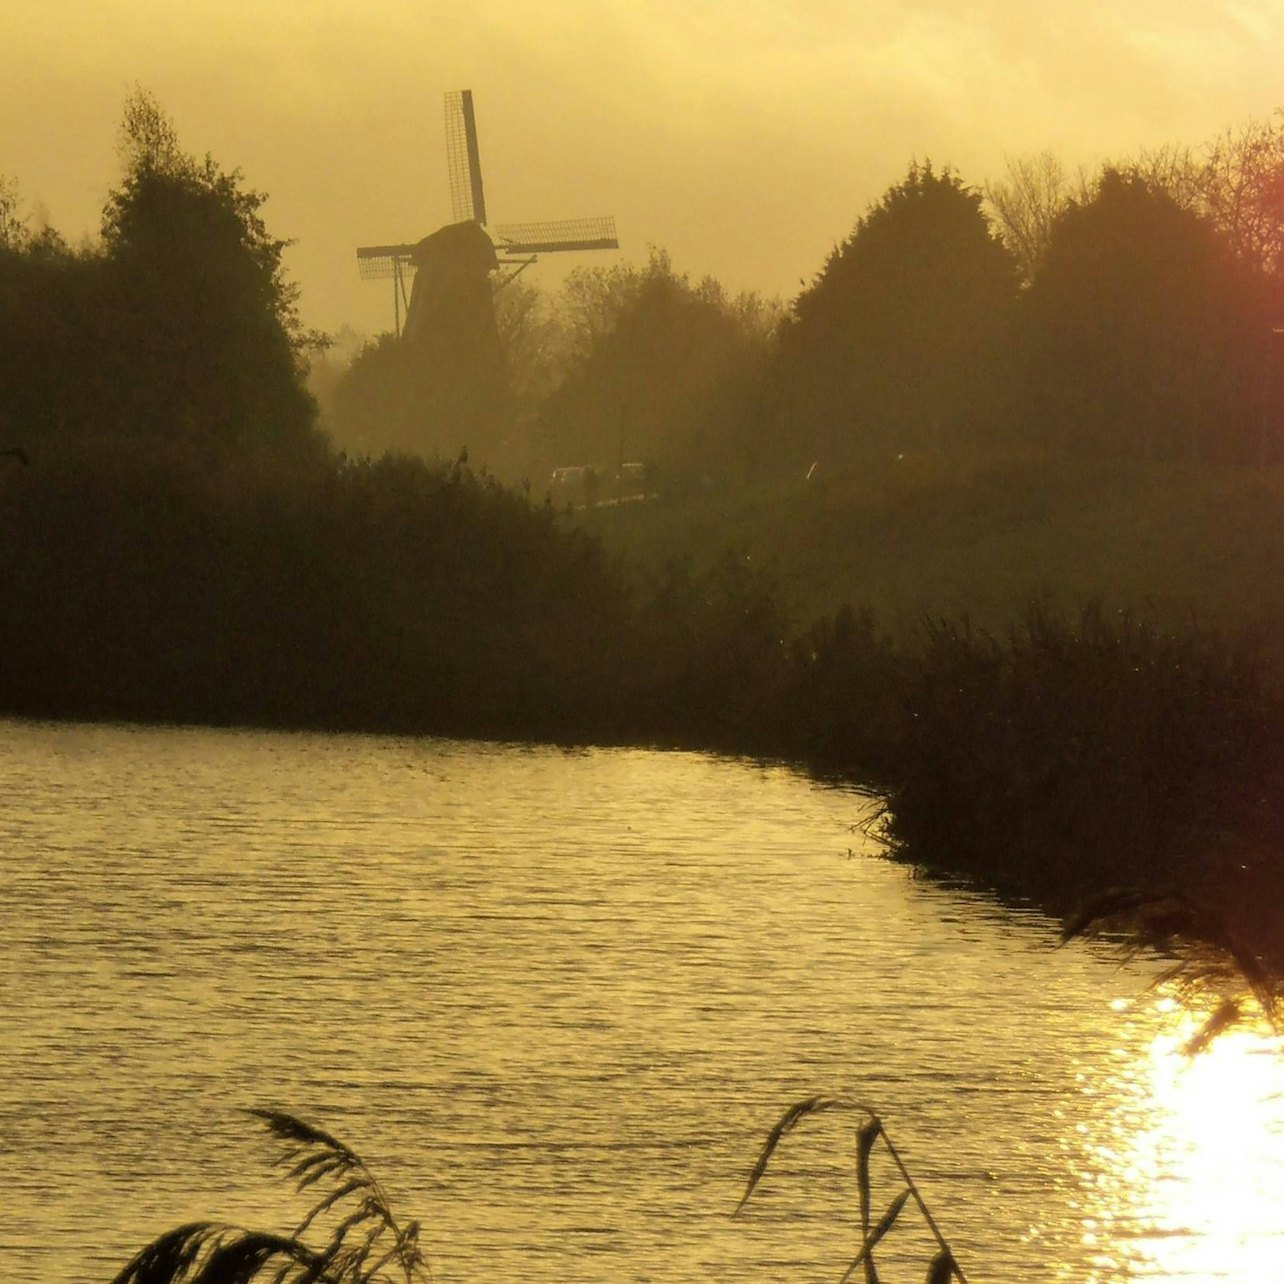 Windmill Amsterdam Sloten - Accommodations in Ámsterdam